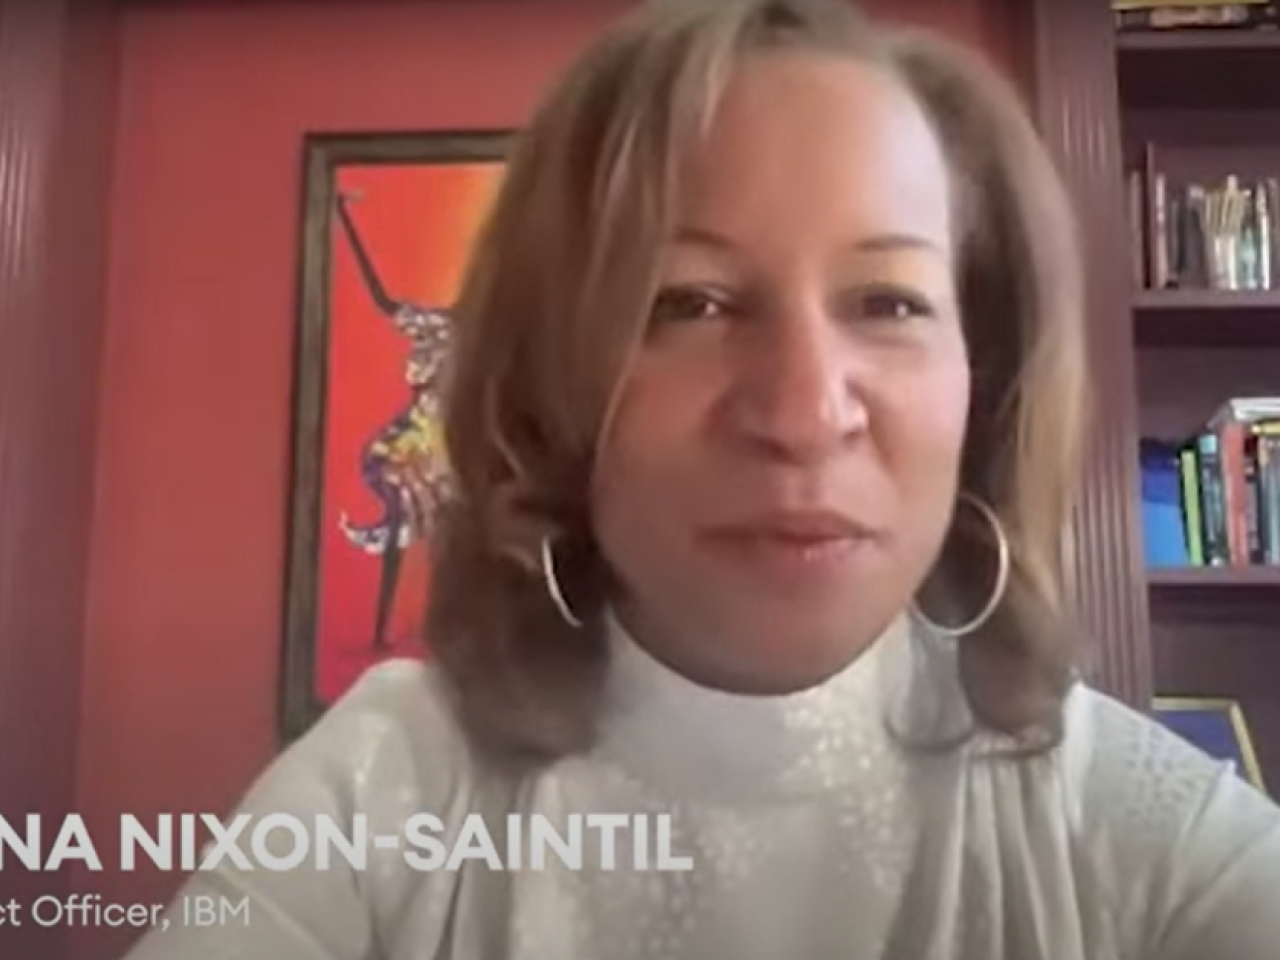 Justina Nixon-Saintil sitting in a home office setting